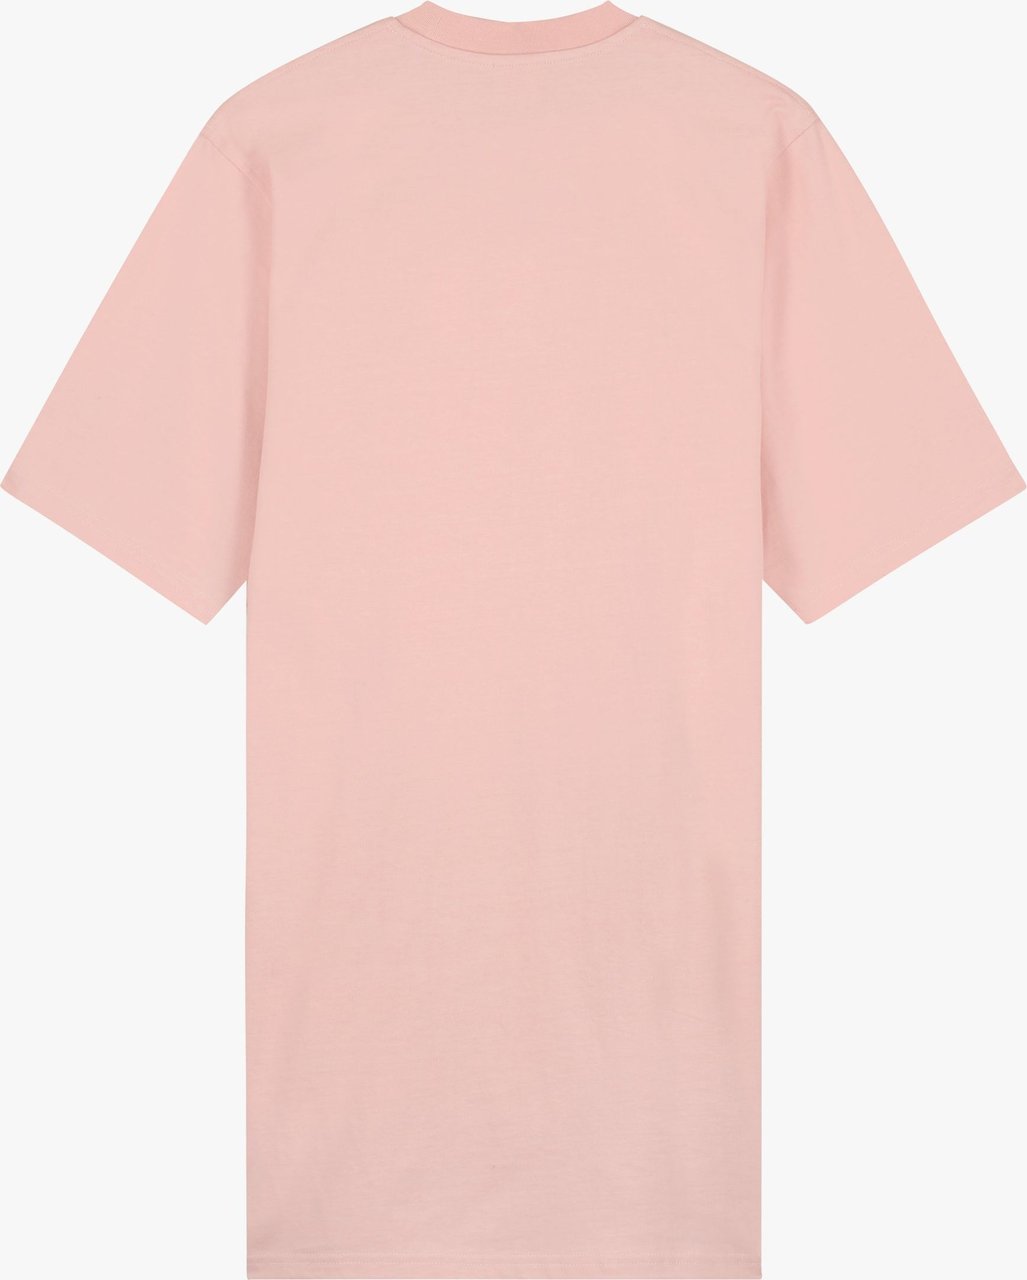 Malelions Harper T-Shirt Dress - Pink Roze